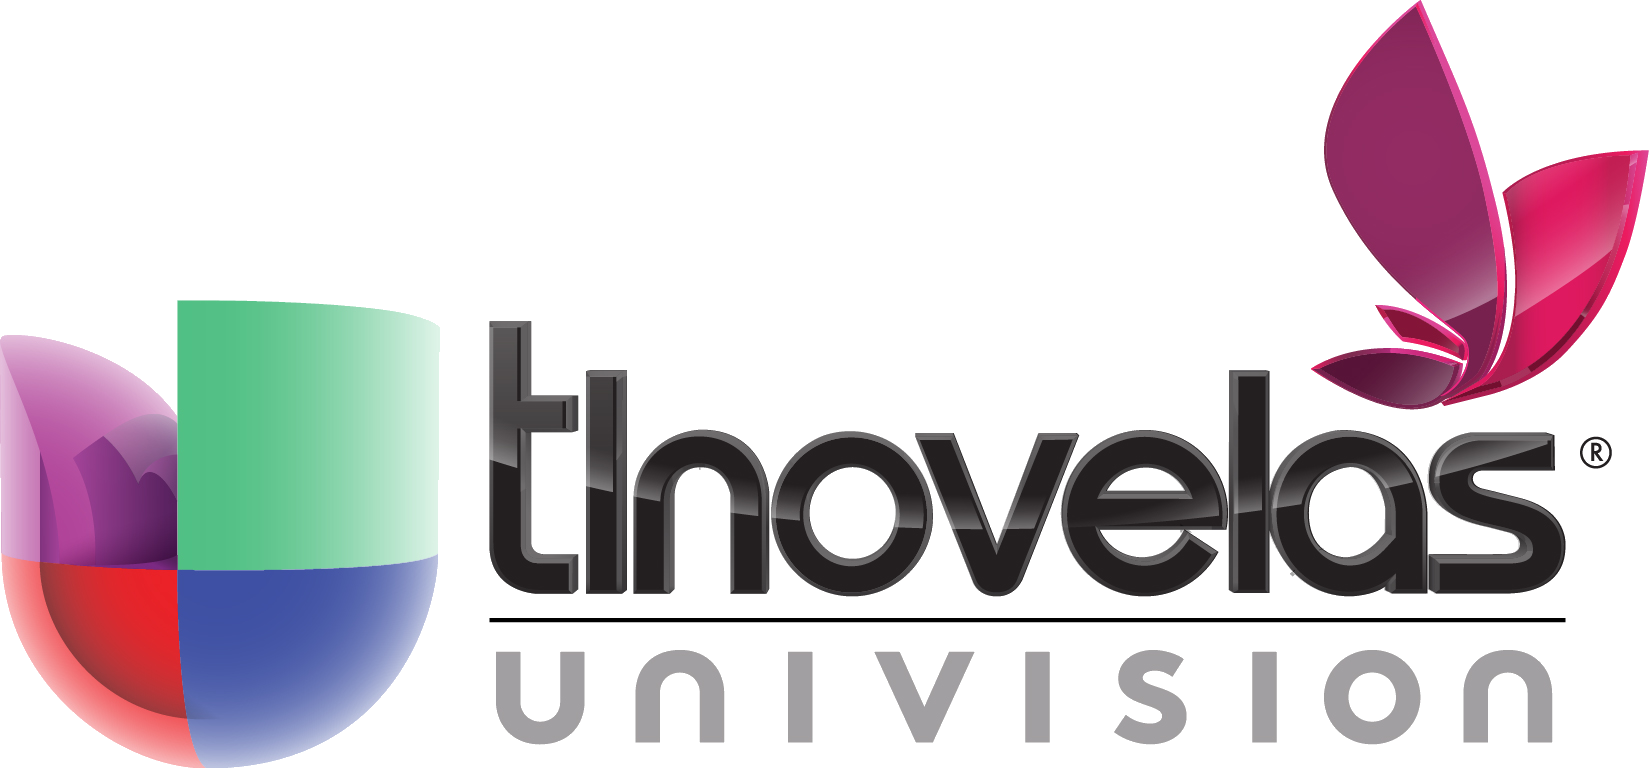 Univision tlnovelas - Logopedia, the logo and branding site